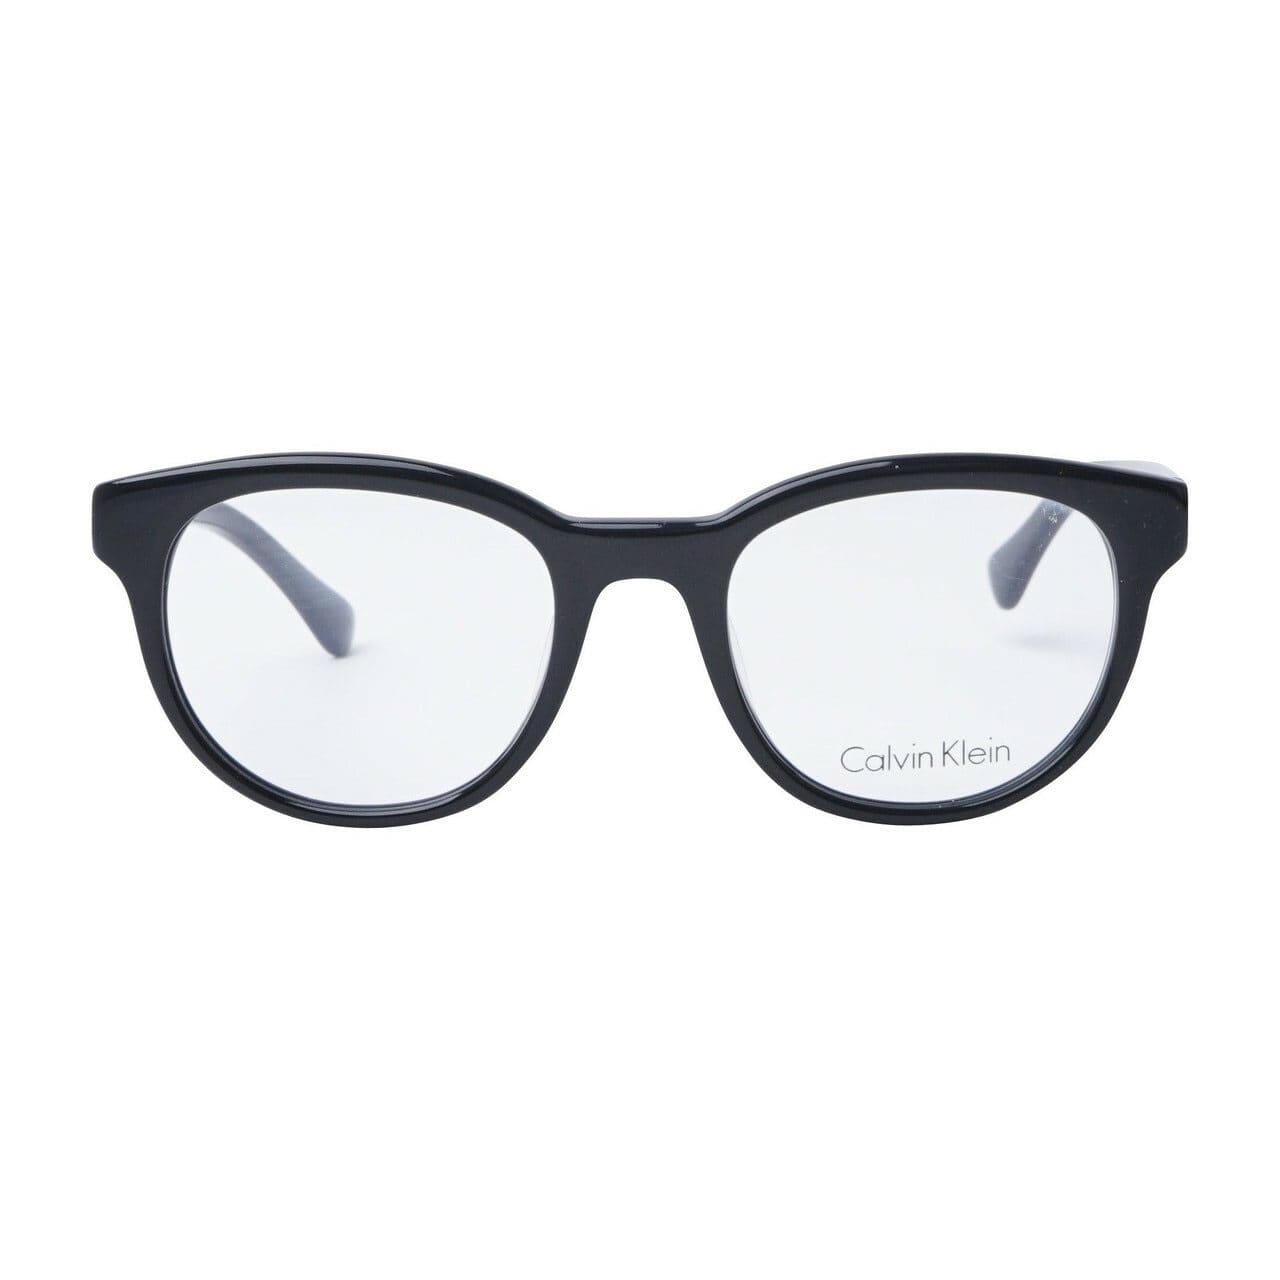 Calvin Klein CK-5887-001 Black Round Unisex Plastic Eyeglasses 750779084878